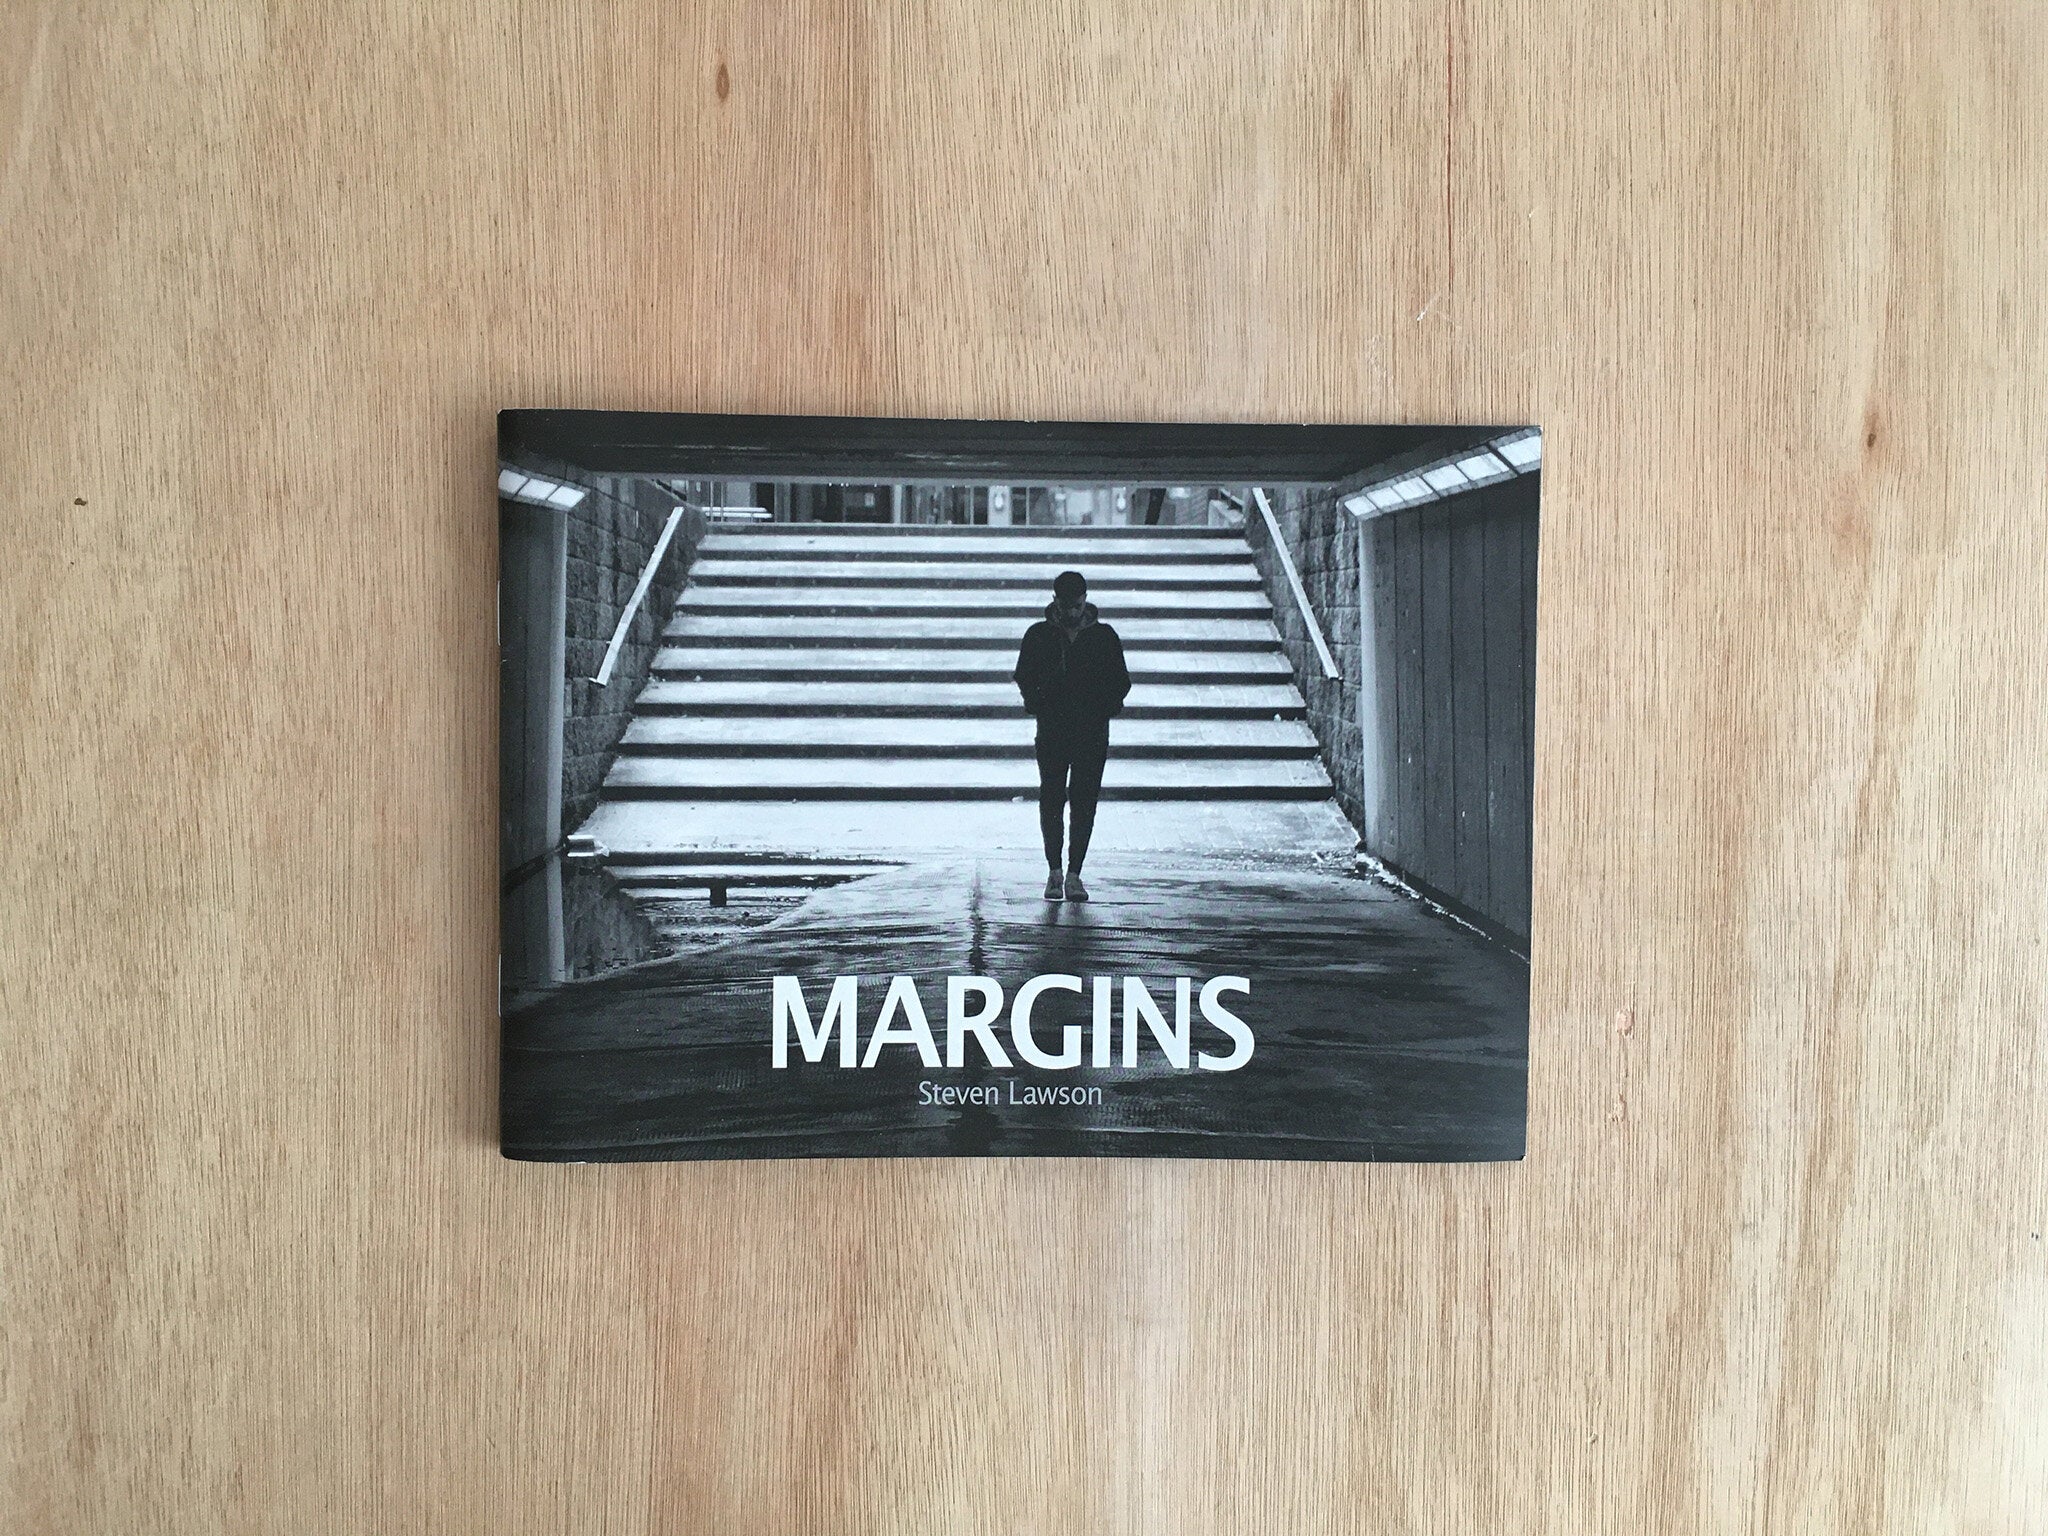 MARGINS by Steven Lawson